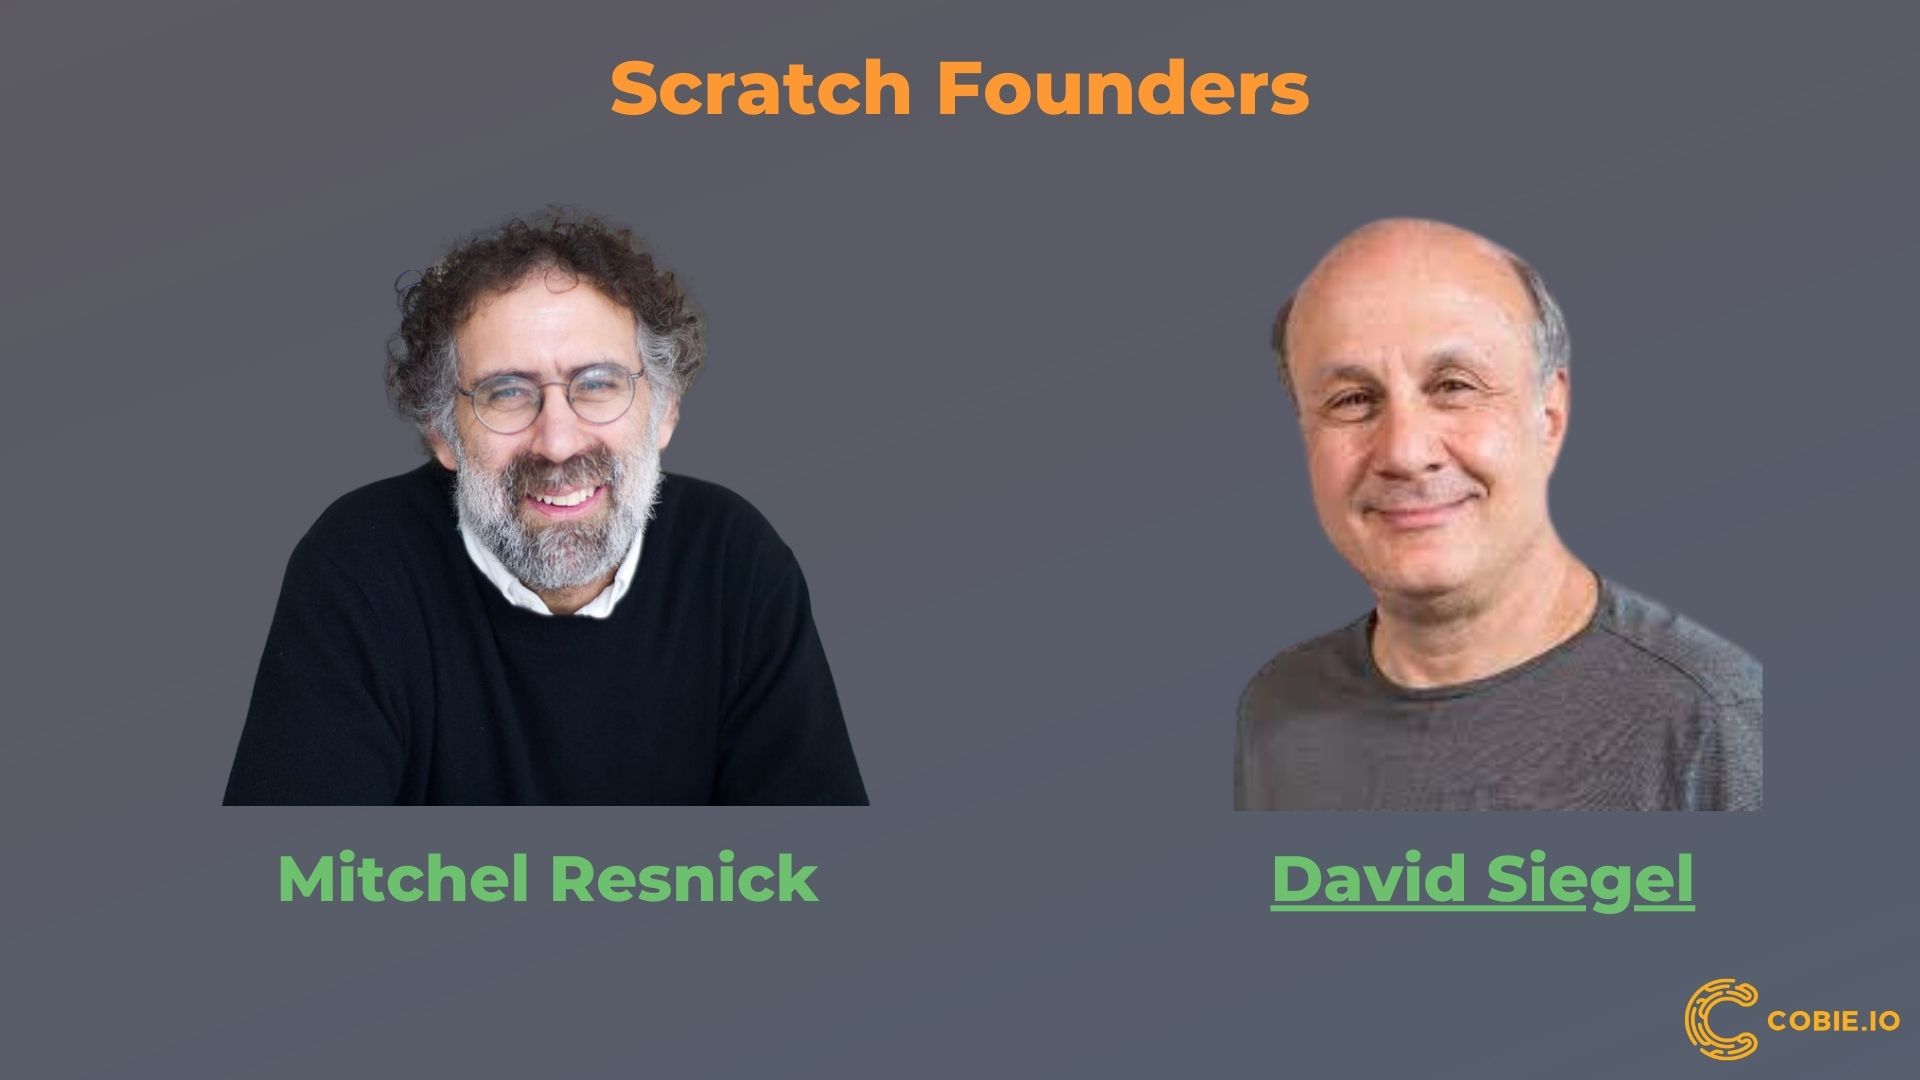 Scratch founders